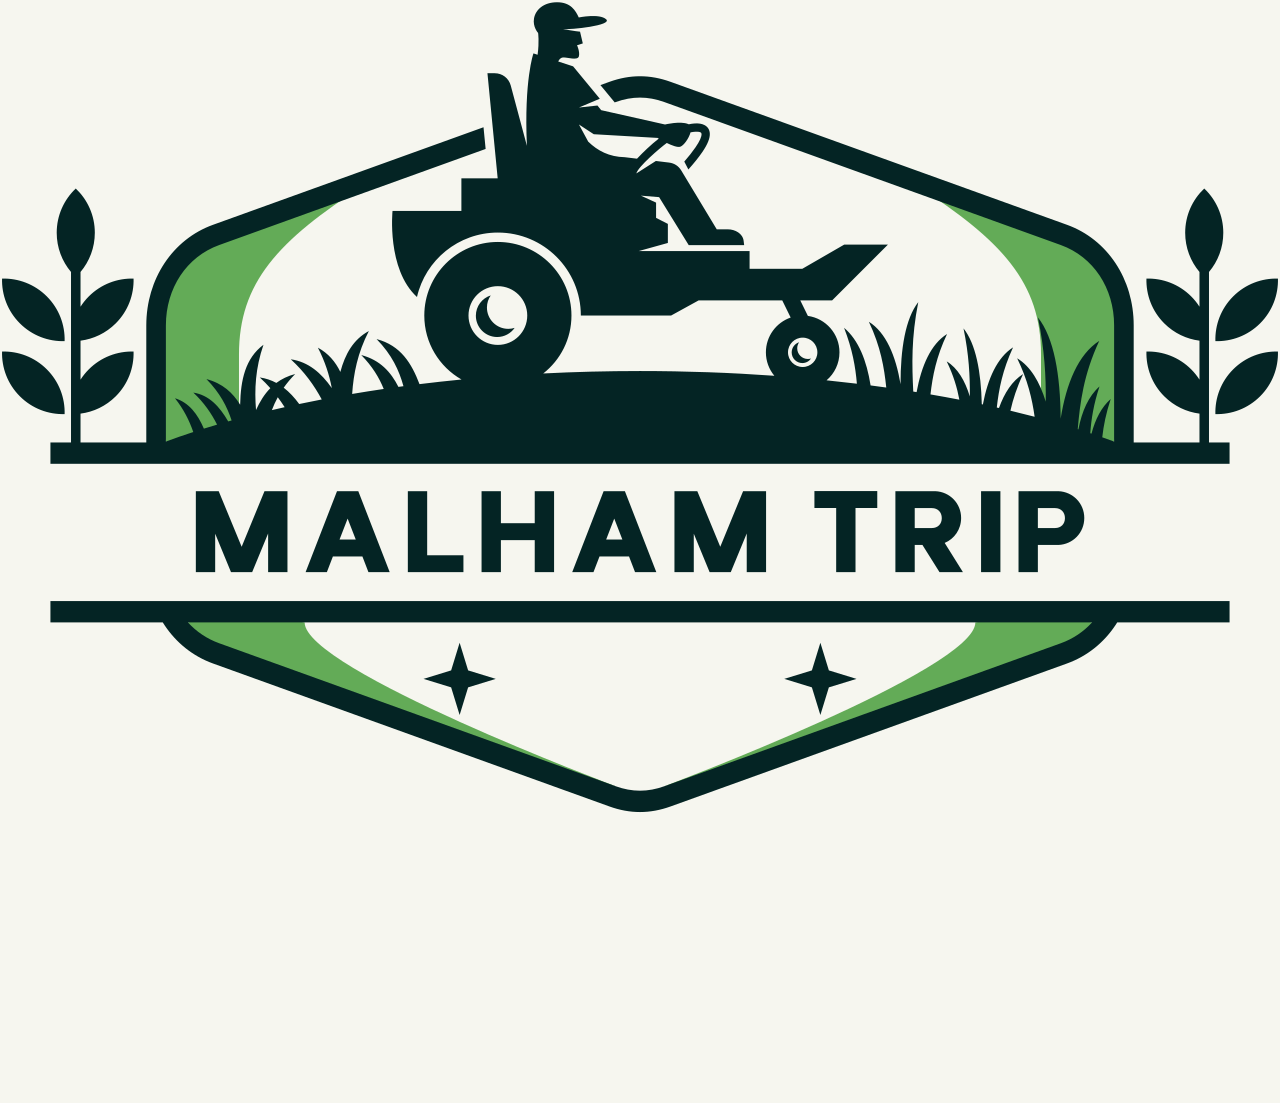 Malham Trip's logo